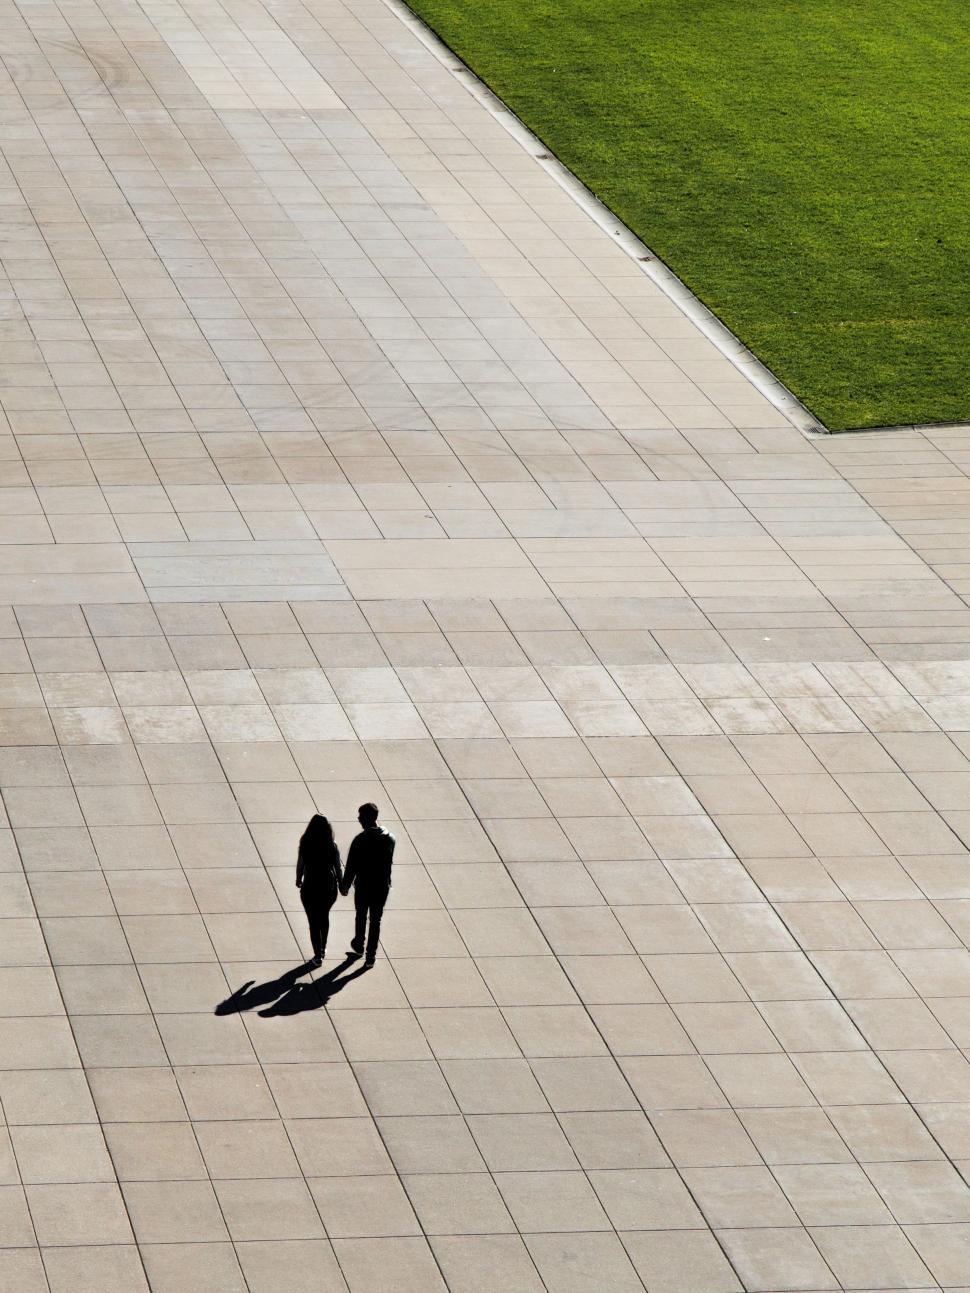 Free Image of Two People Walking Down a Sidewalk 